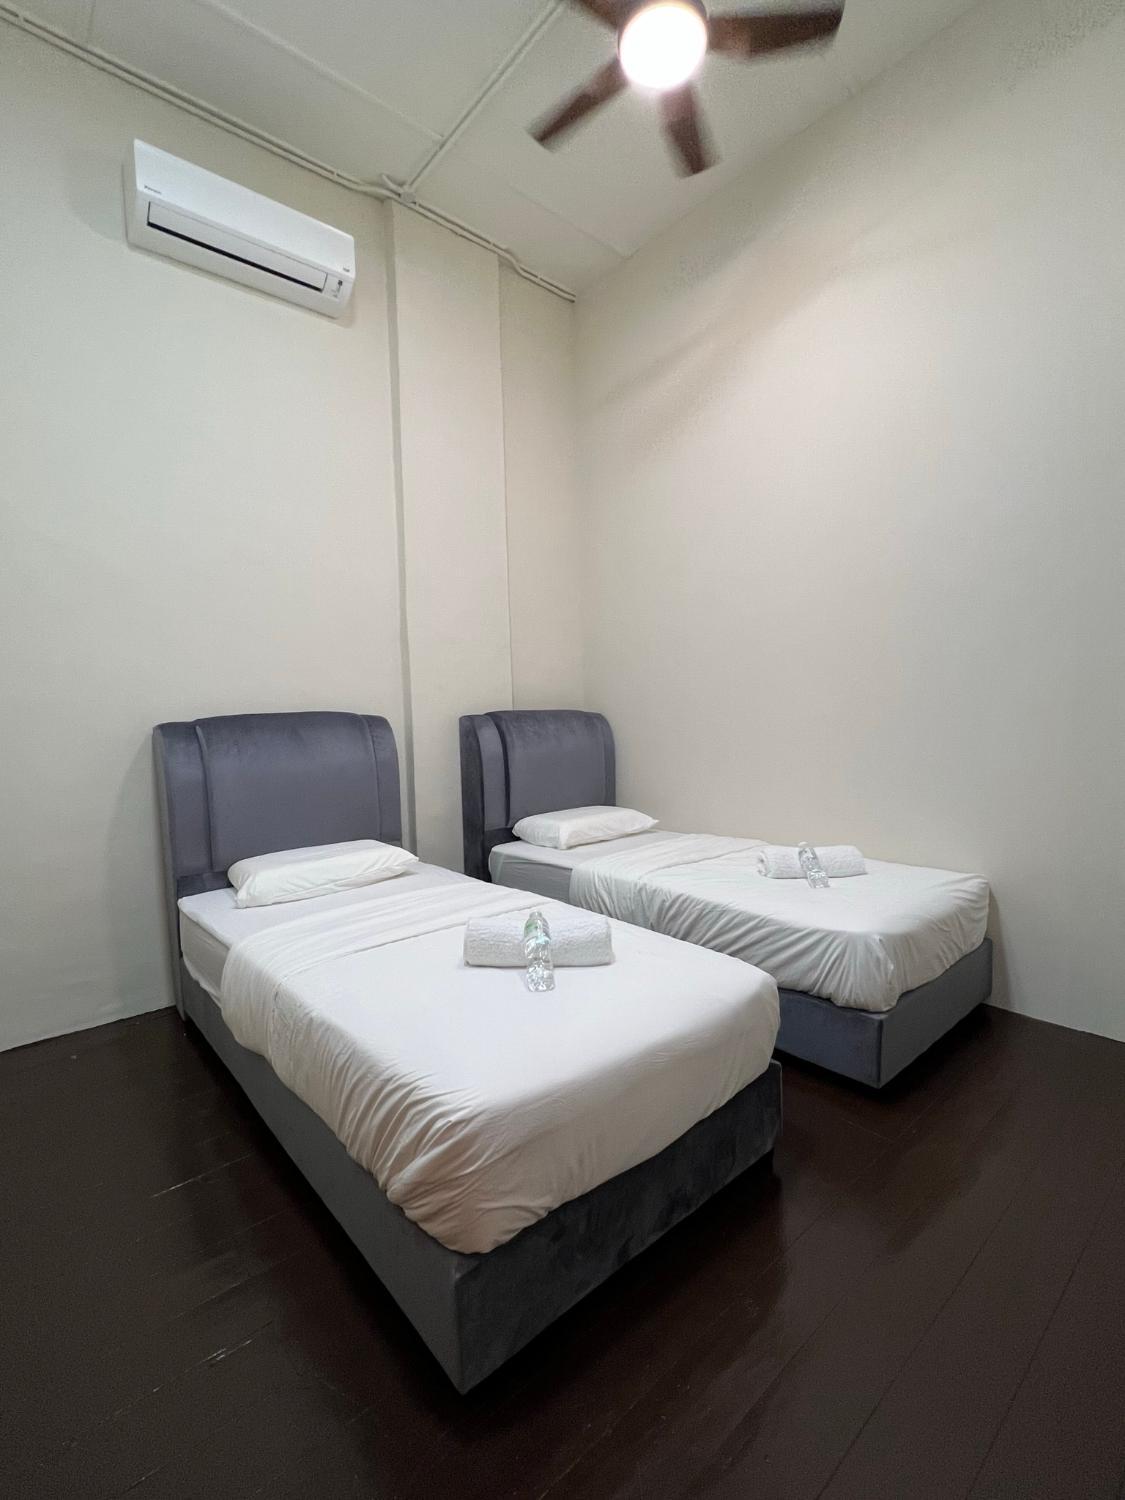 The Neighbour KKB - Rooms with shared bathroom, Hulu Selangor